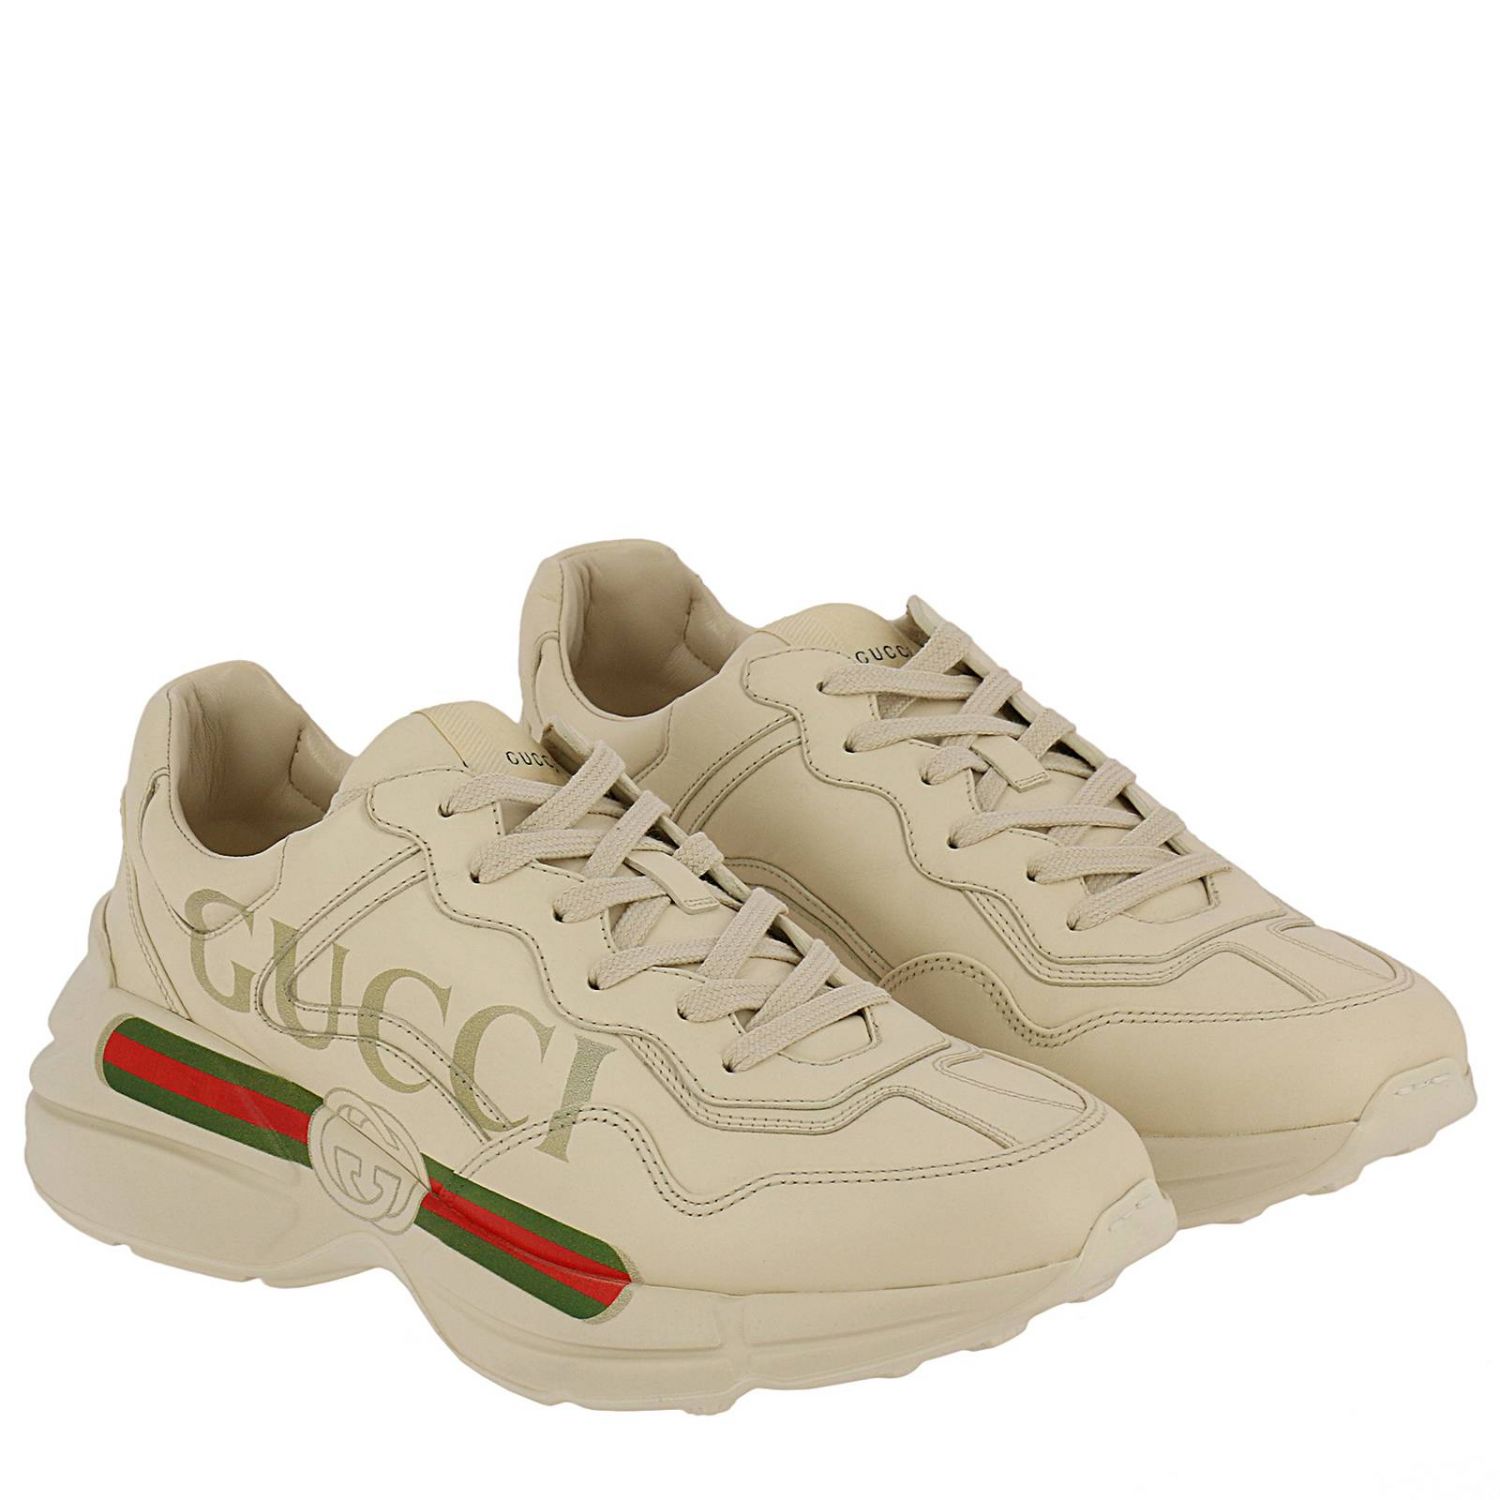 GUCCI: Shoes men | Sneakers Gucci Men White | Sneakers Gucci 500877 ...